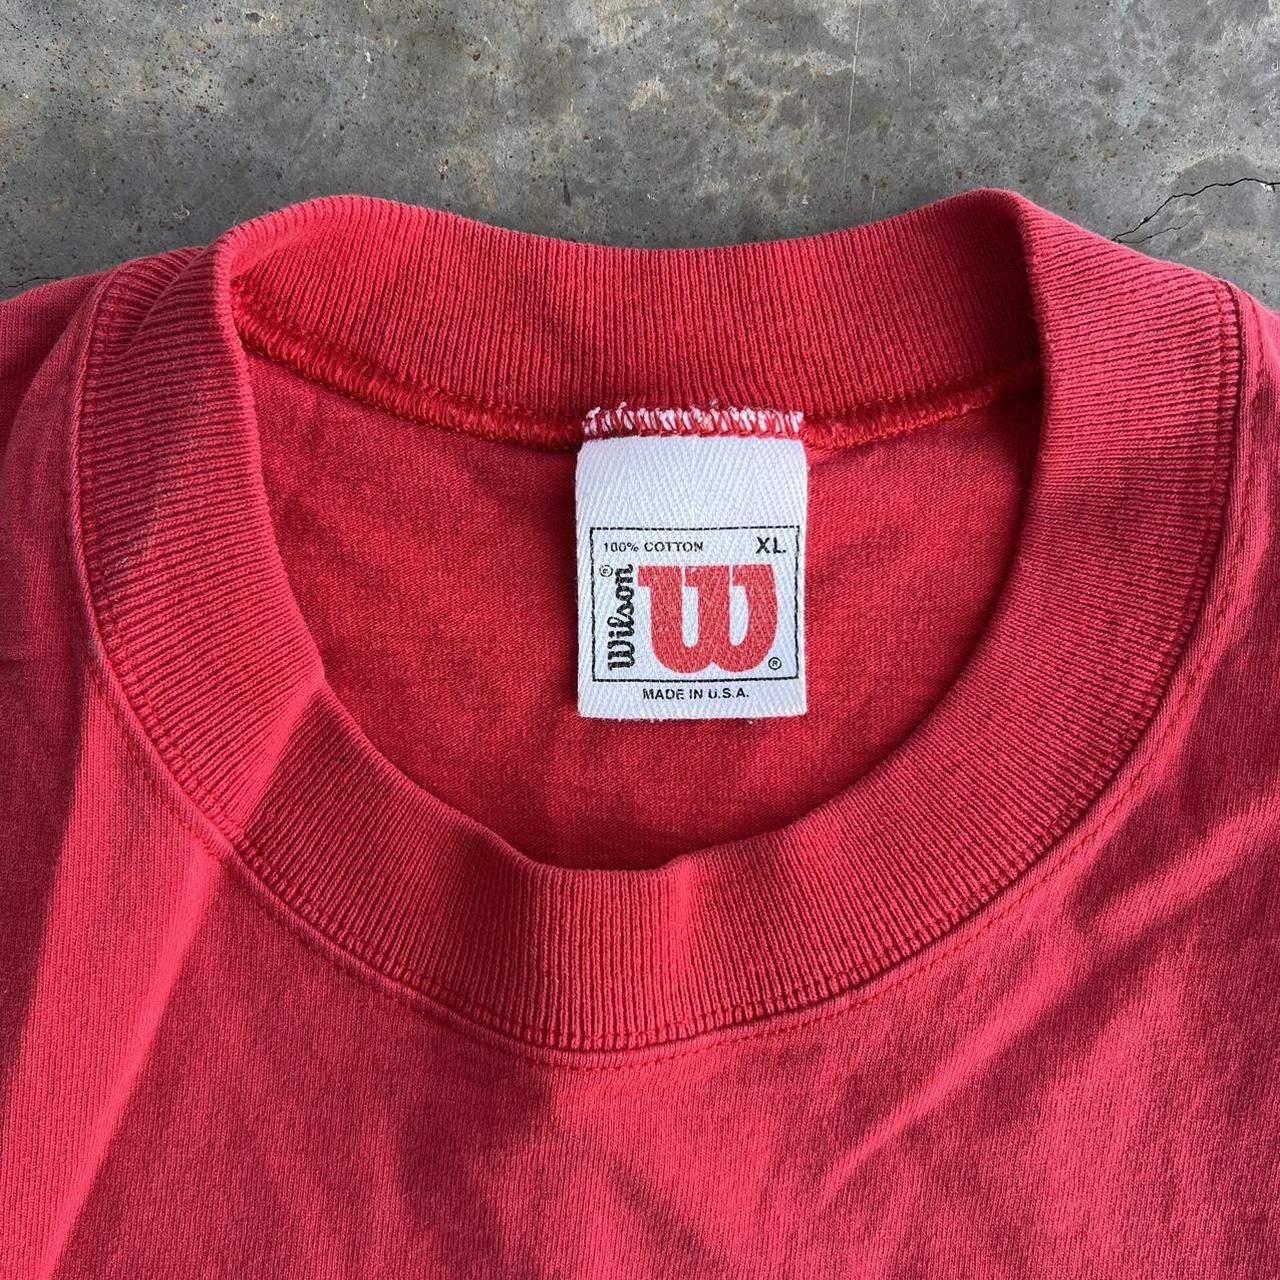 Vintage 90's Wilson Athletic Wear Red Faded - Depop